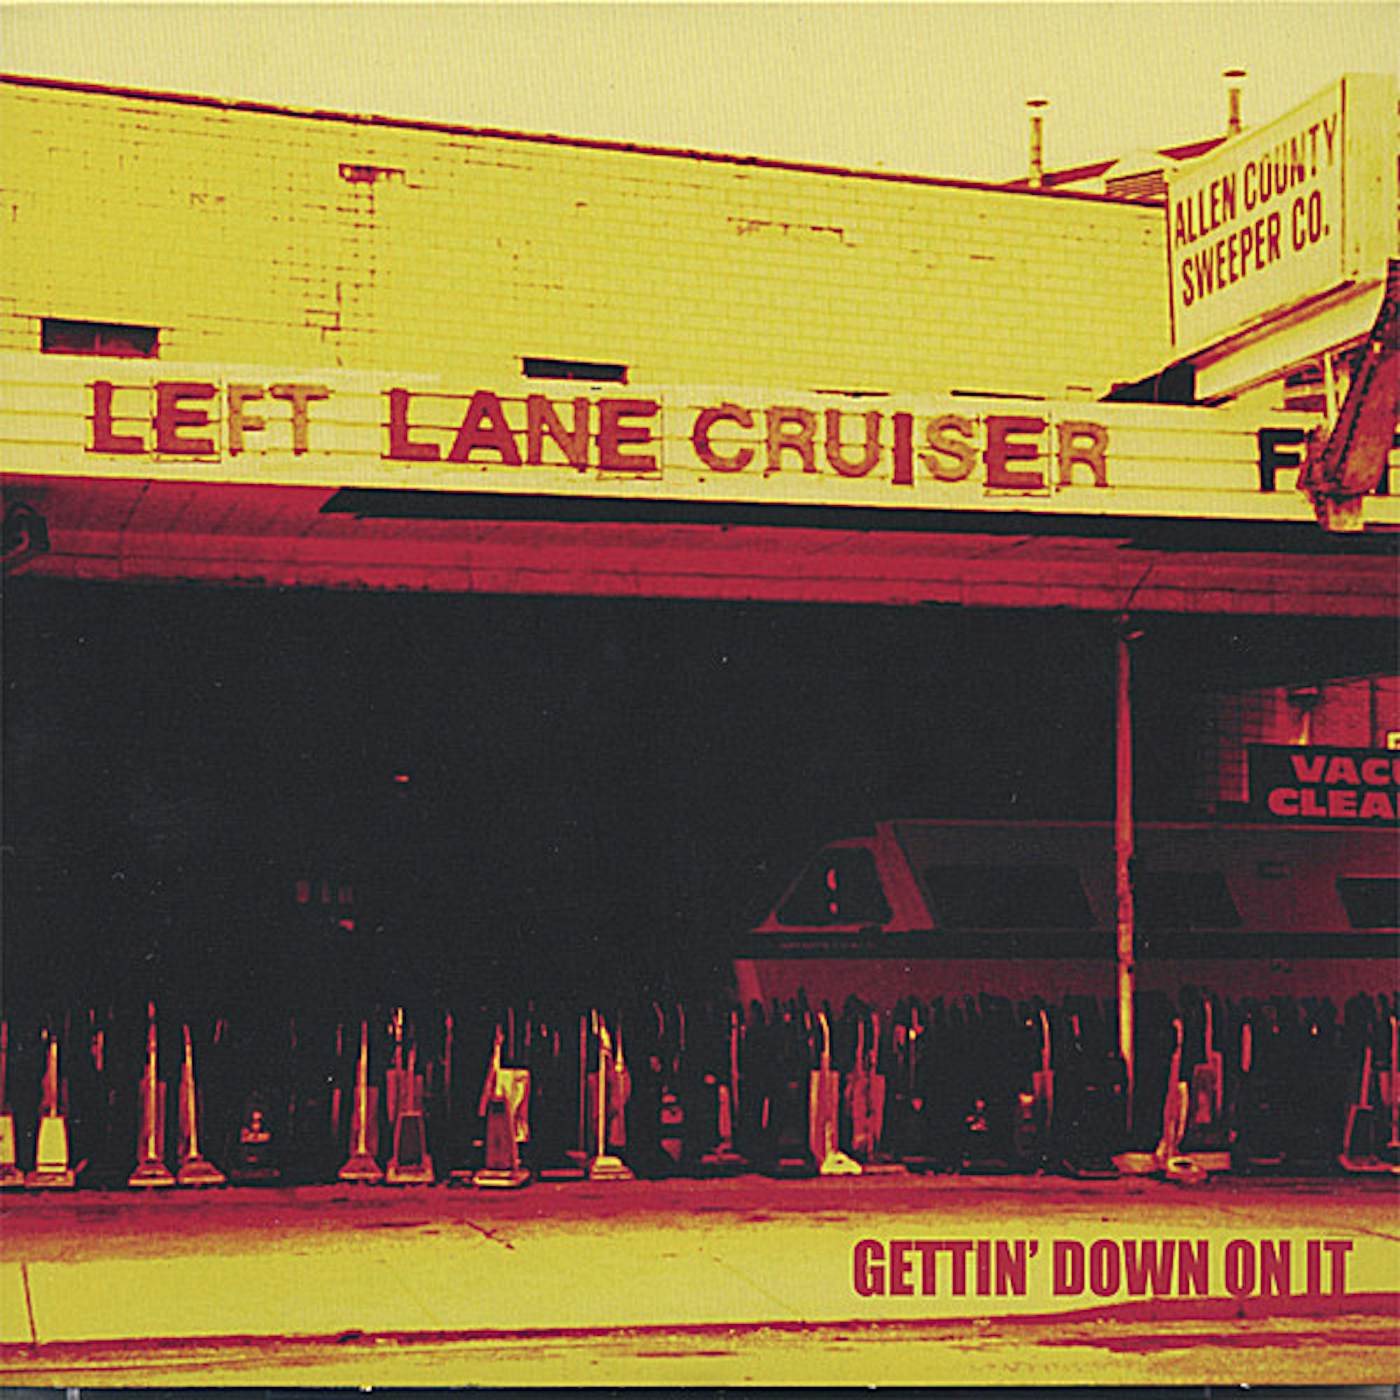 Left Lane Cruiser GETTING DOWN TO IT CD